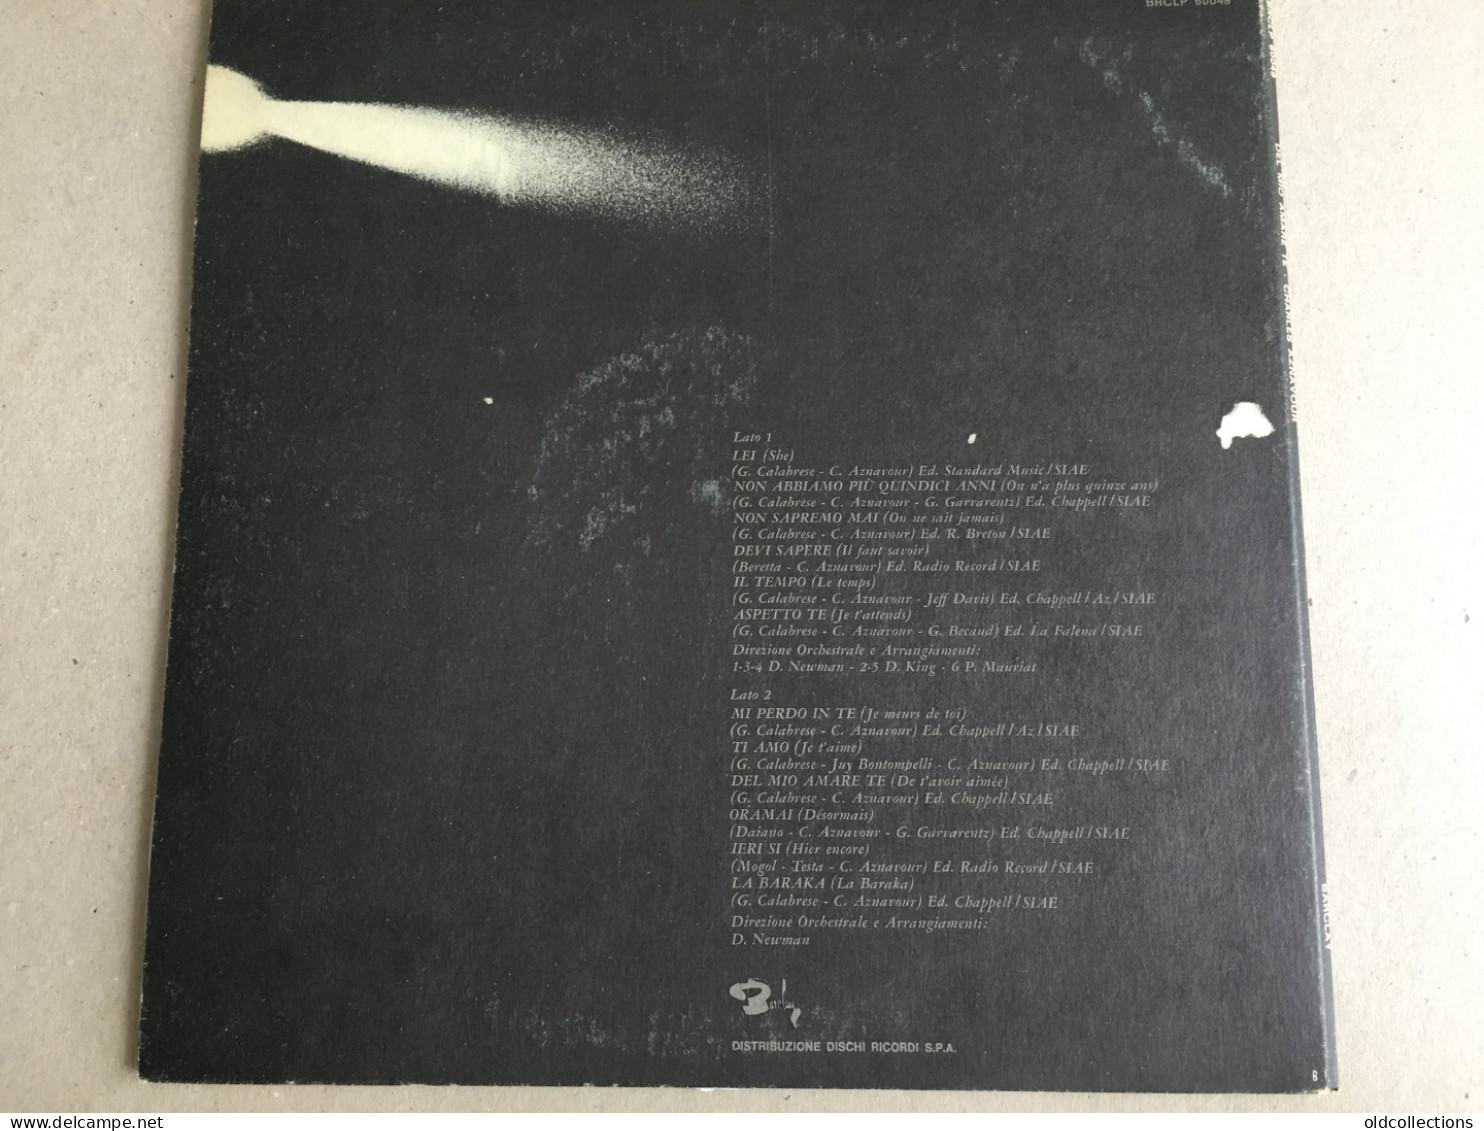 Schallplatte Vinyl Record Disque Vinyle LP Record - Charles Aznavour Del Mio Amare Te - Vinyl + Album Photo - Autres - Musique Italienne